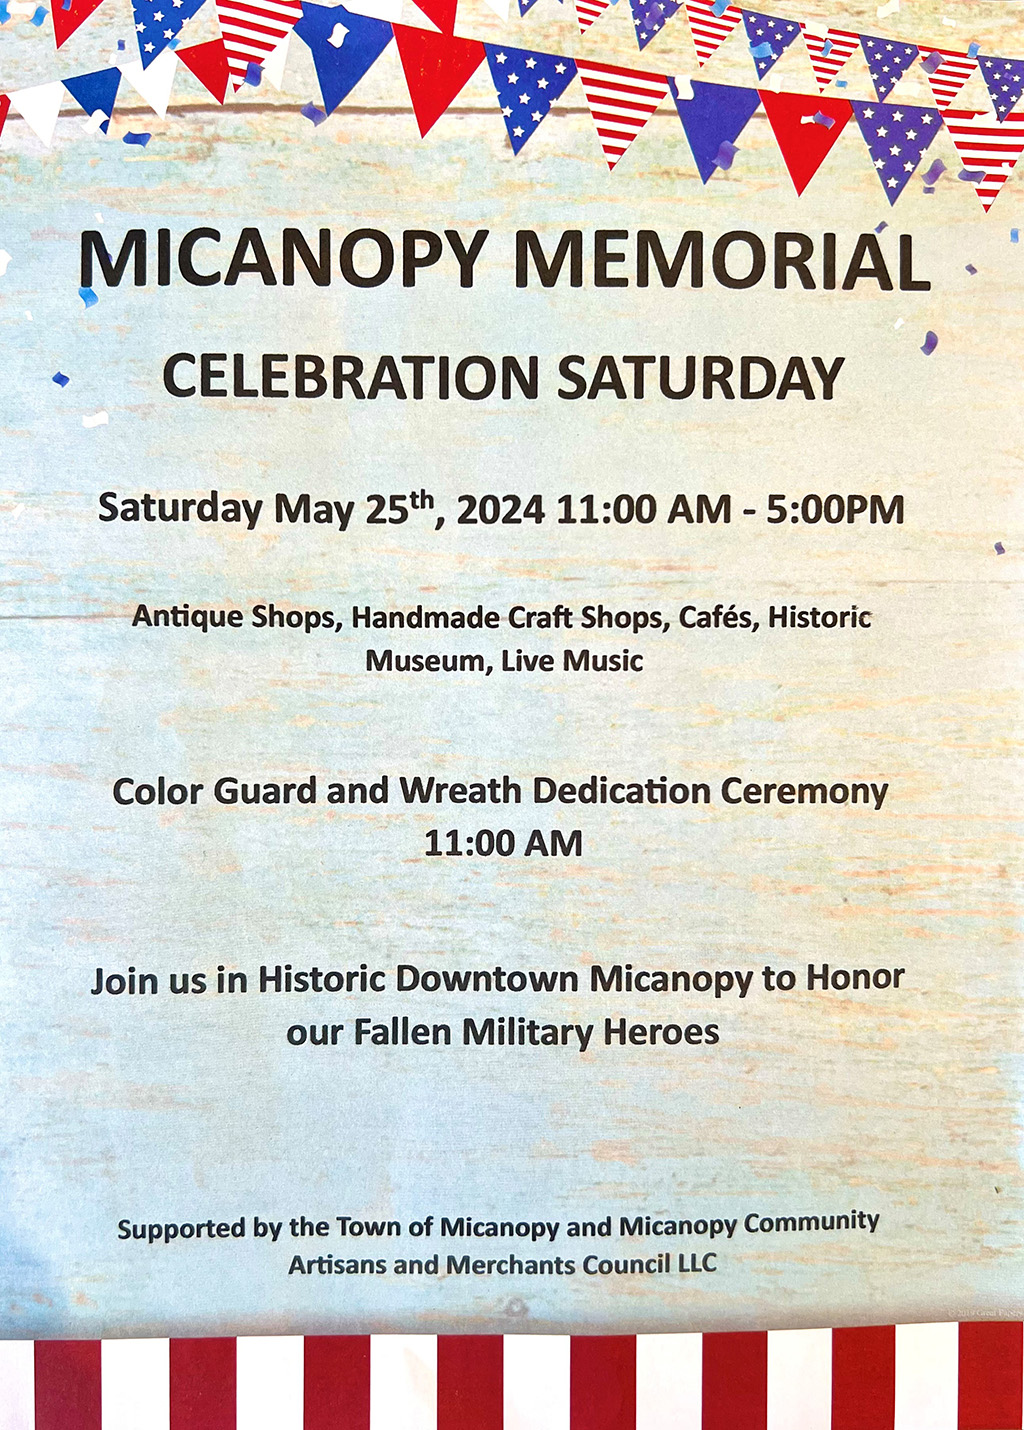 Micanopy memorial celebration saturday